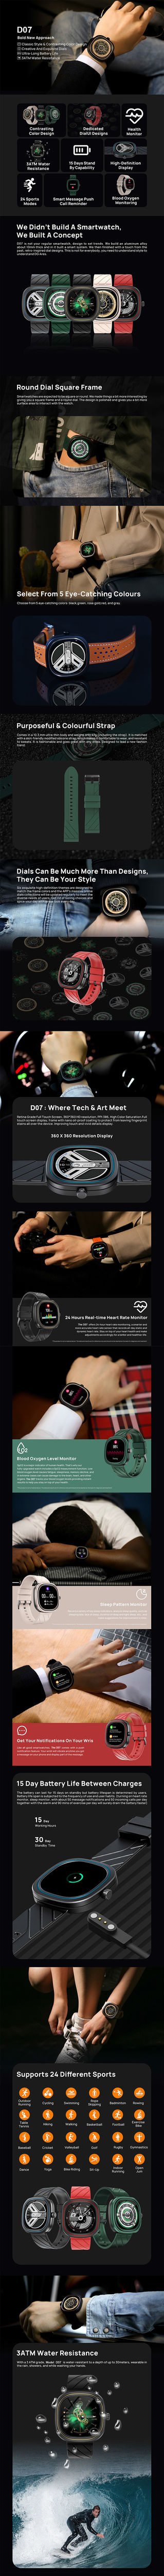 360x360 Pixel Sedentary Alert Smartwatch With Blood Pressure Monitor IP68